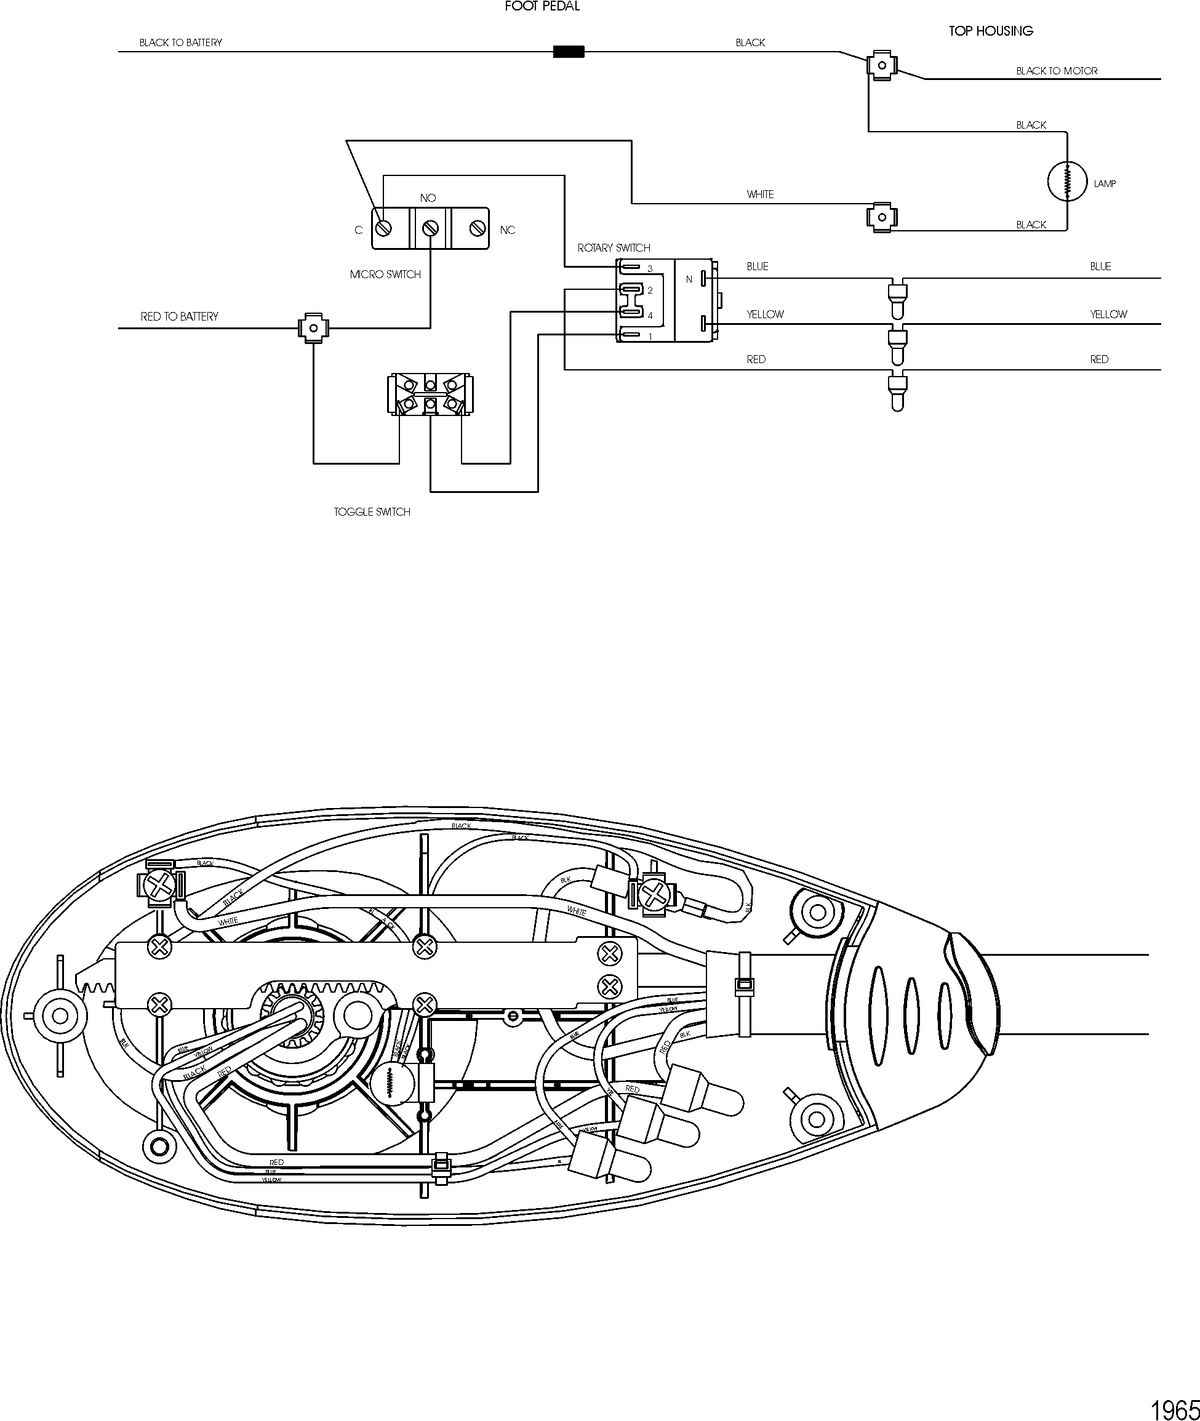 TROLLING MOTOR MOTORGUIDE FRESH WATER SERIES Wire Diagram(Model FW46FB)